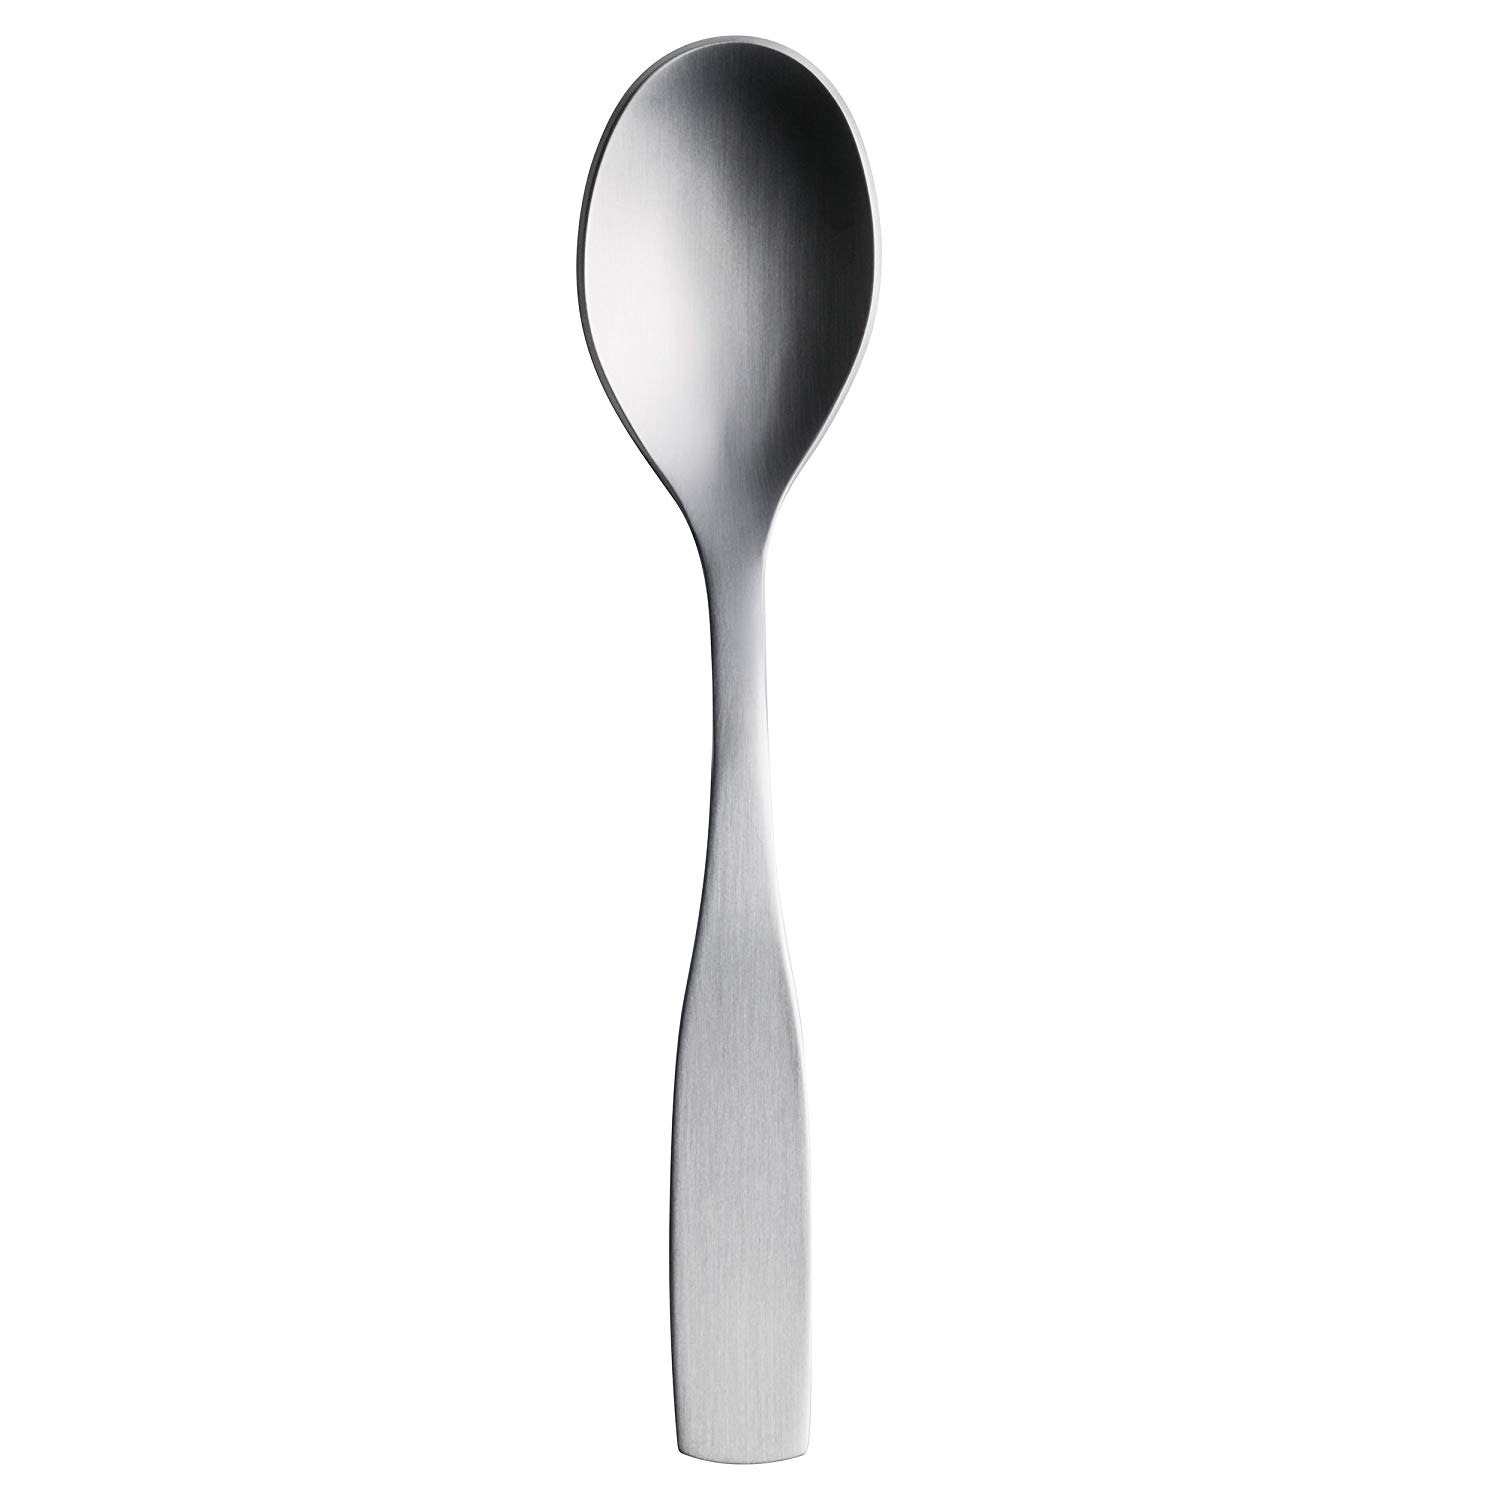 Iittala Citterio 98 Coffee Spoon – Brushed Stainless Steel